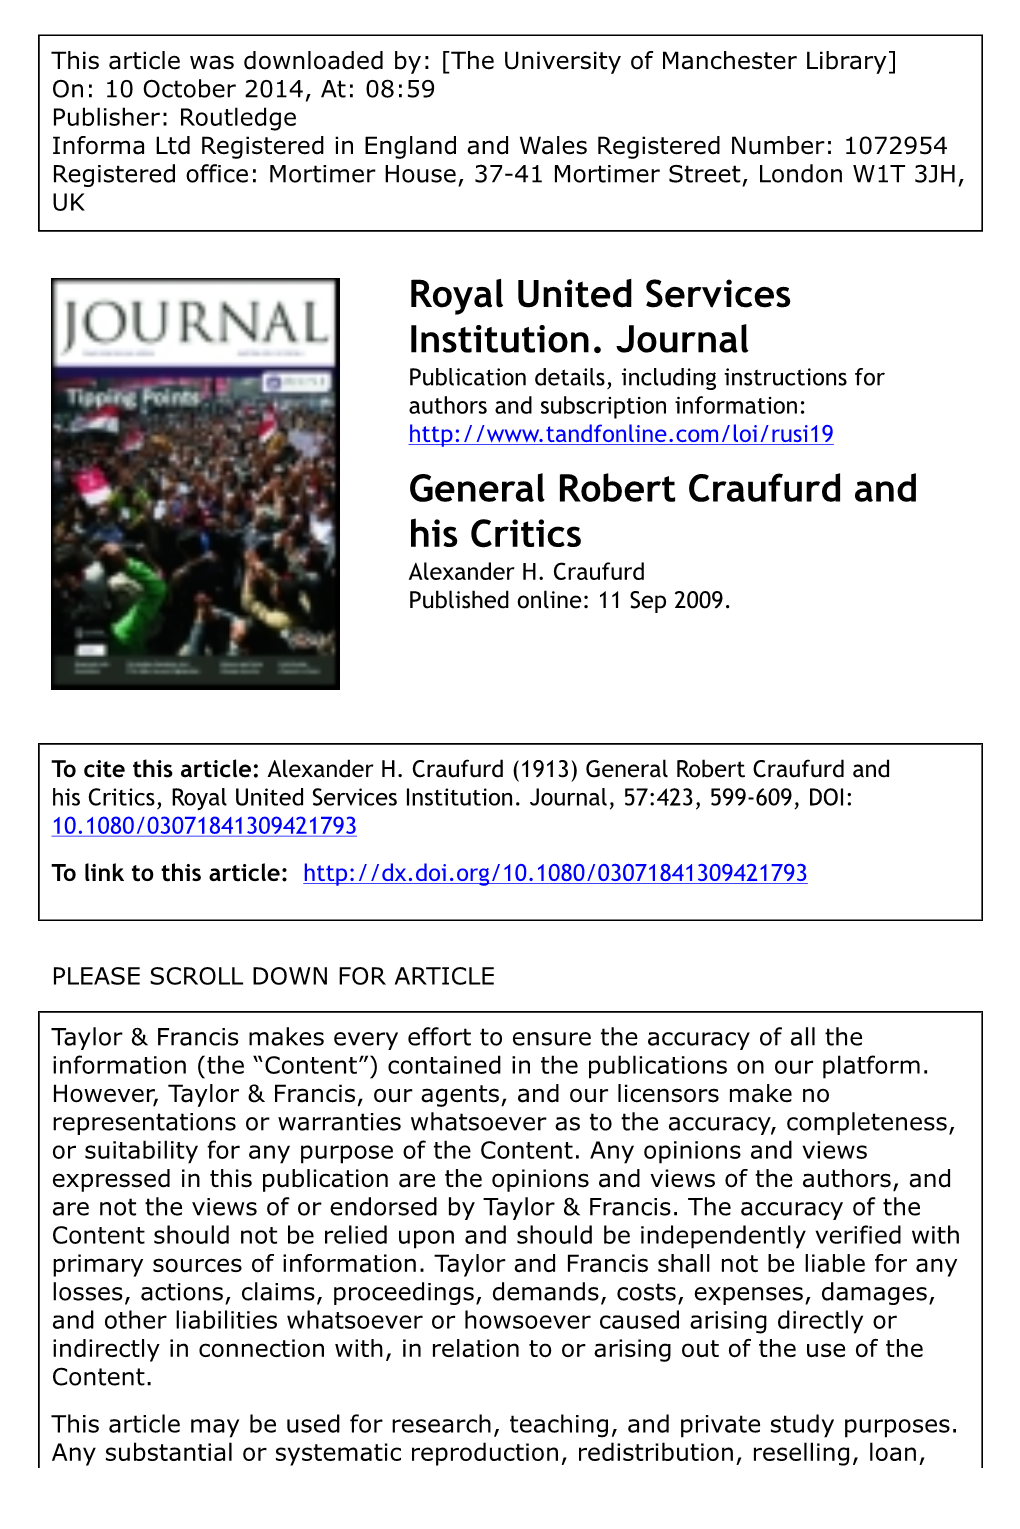 Royal United Services Institution. Journal General Robert Craufurd